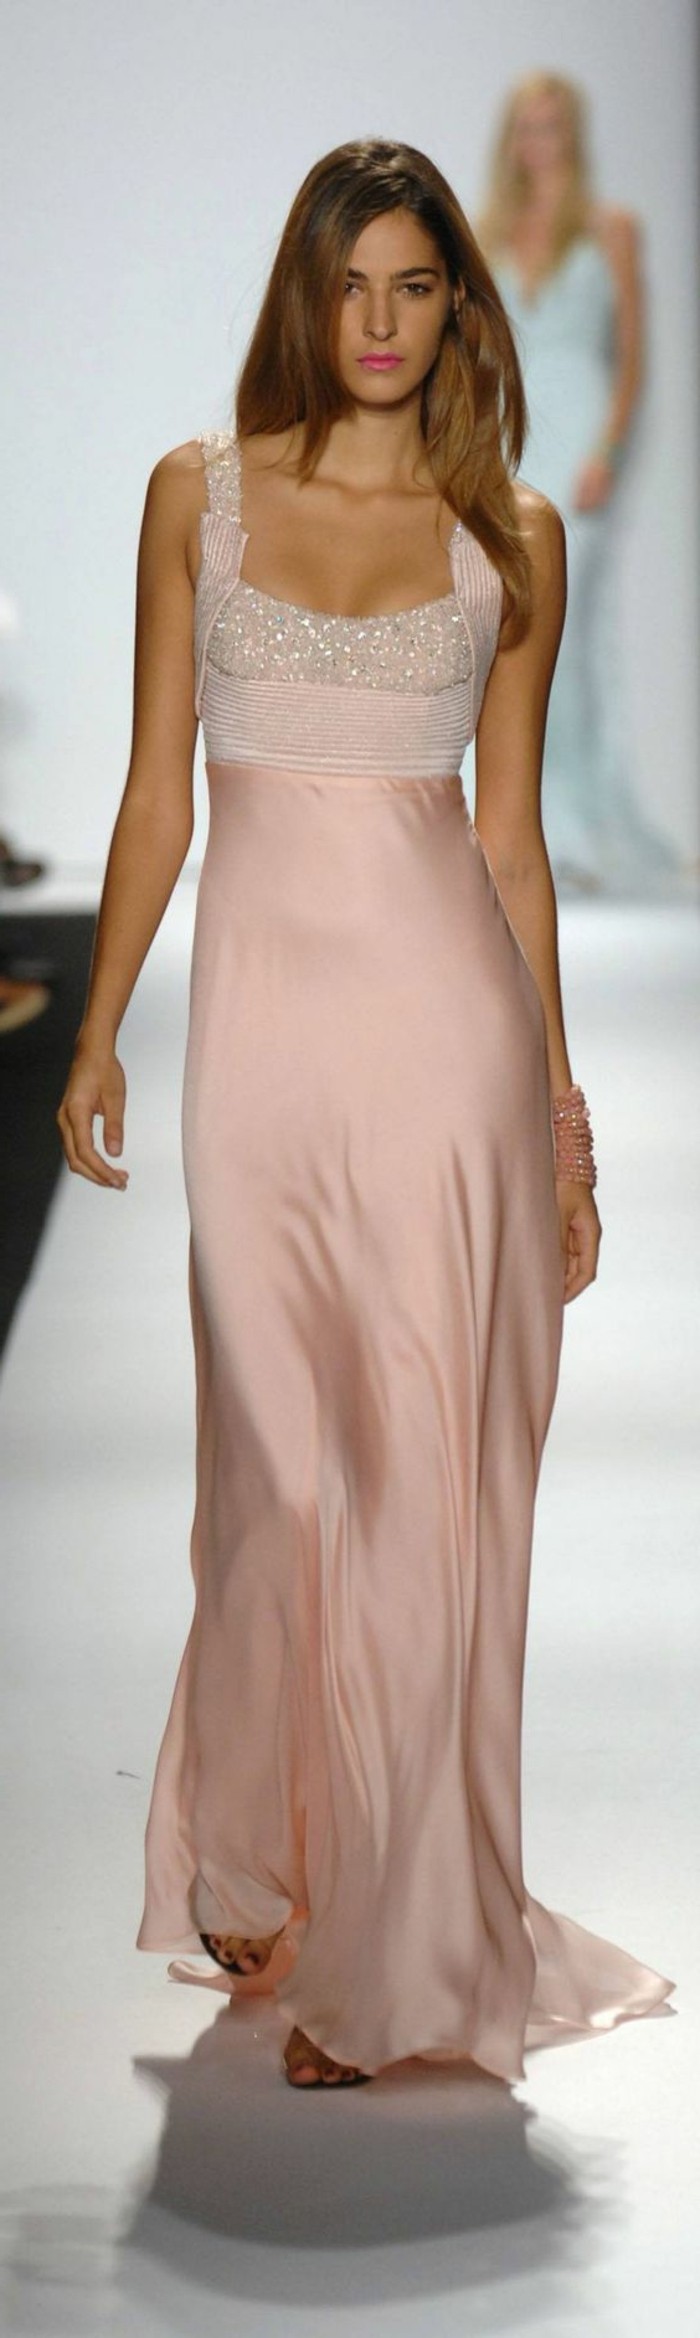 jolie-robe-de-chambre-femme-peignoir-satin-rose-mode-femmes-modernes